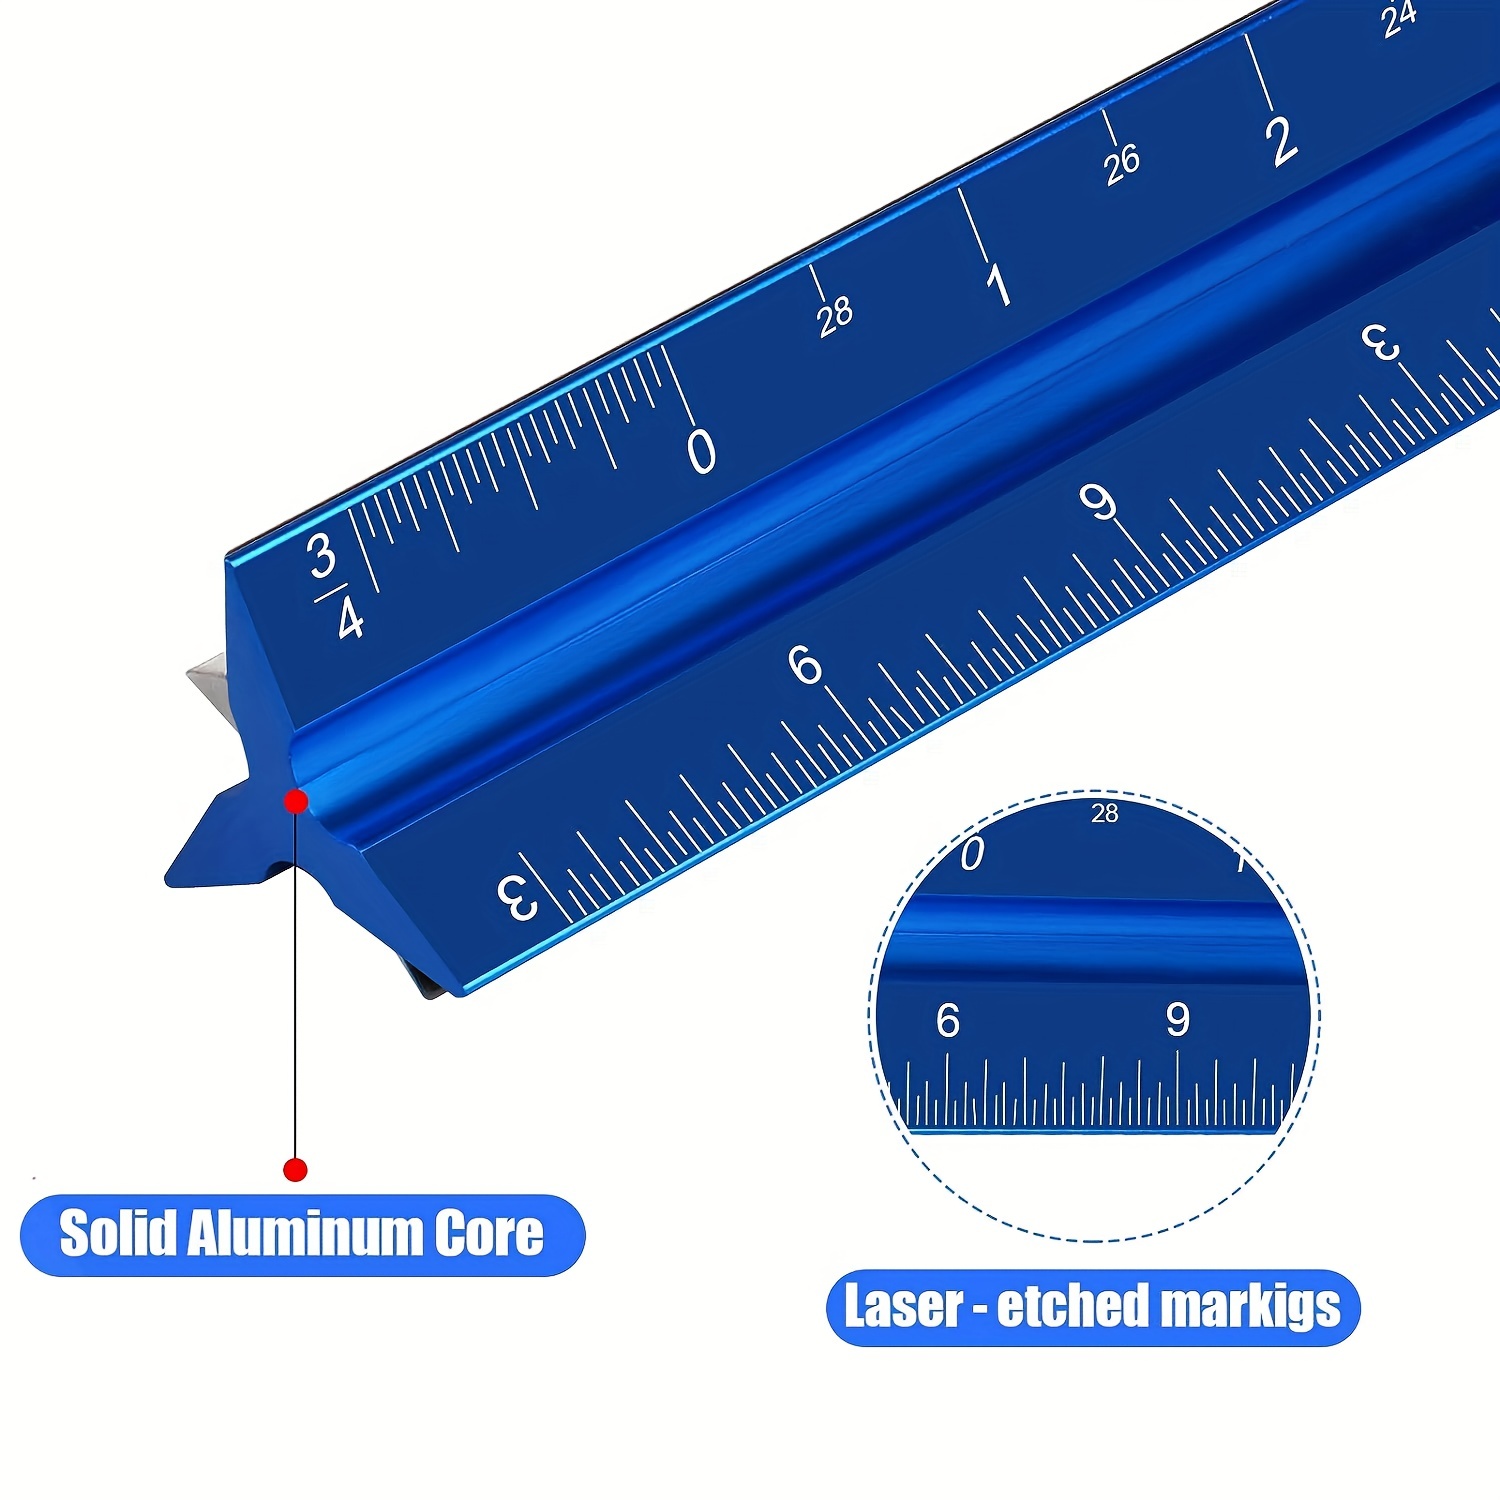 Offidea Steel Ruler 12 Inch and Steel Ruler 6 Inch Set - Metal Rulers